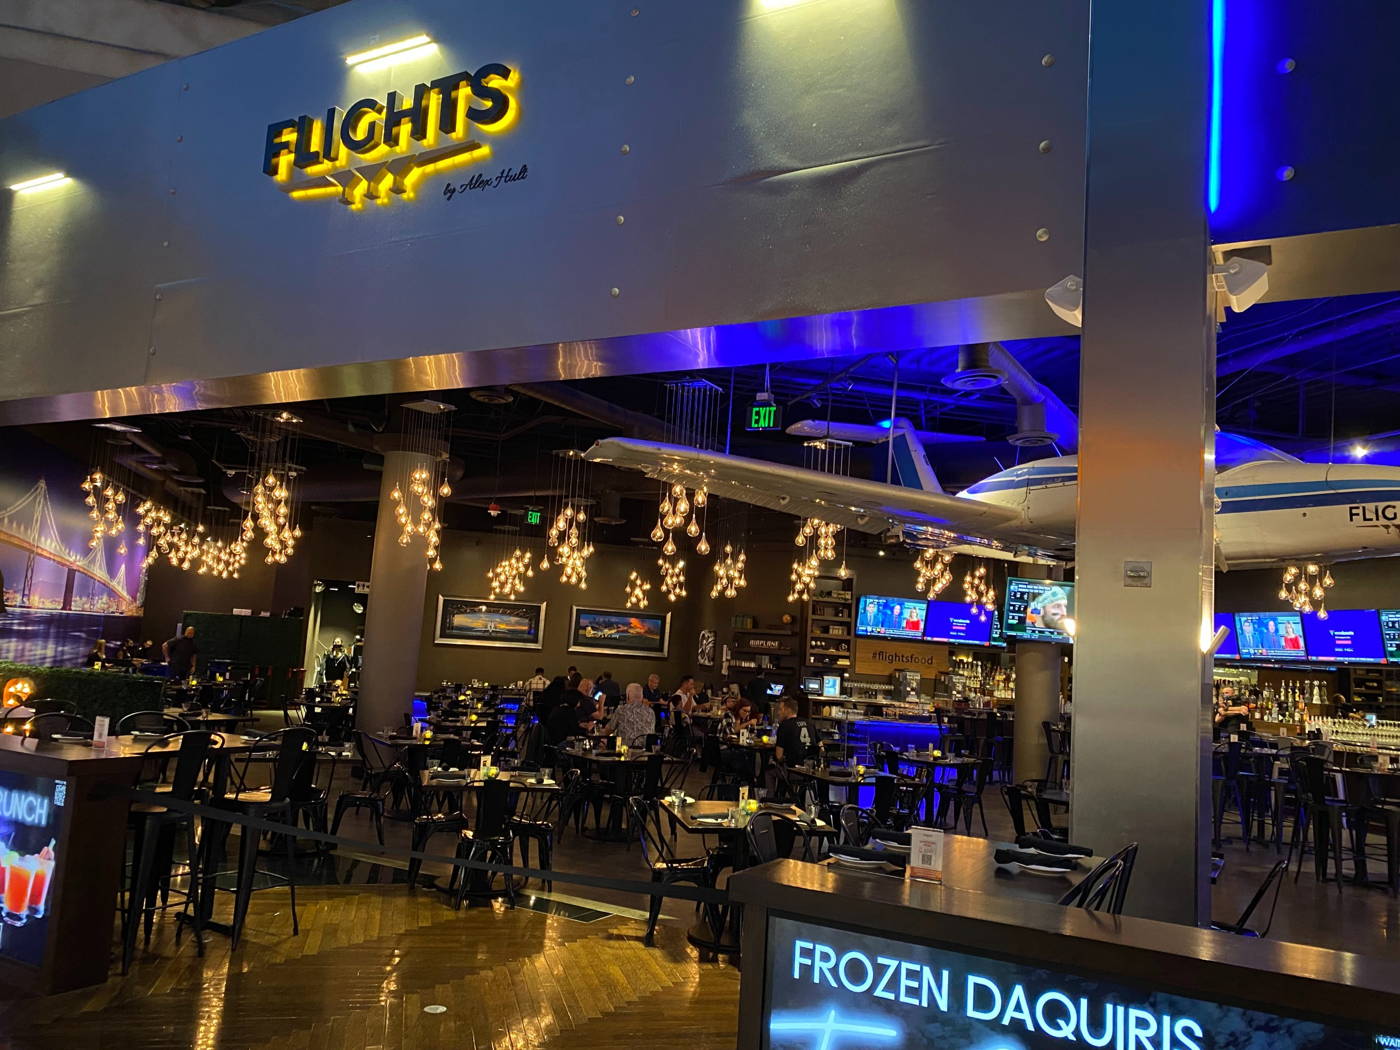 Flights Restaurant at Miracle Mile Shops Las Vegas